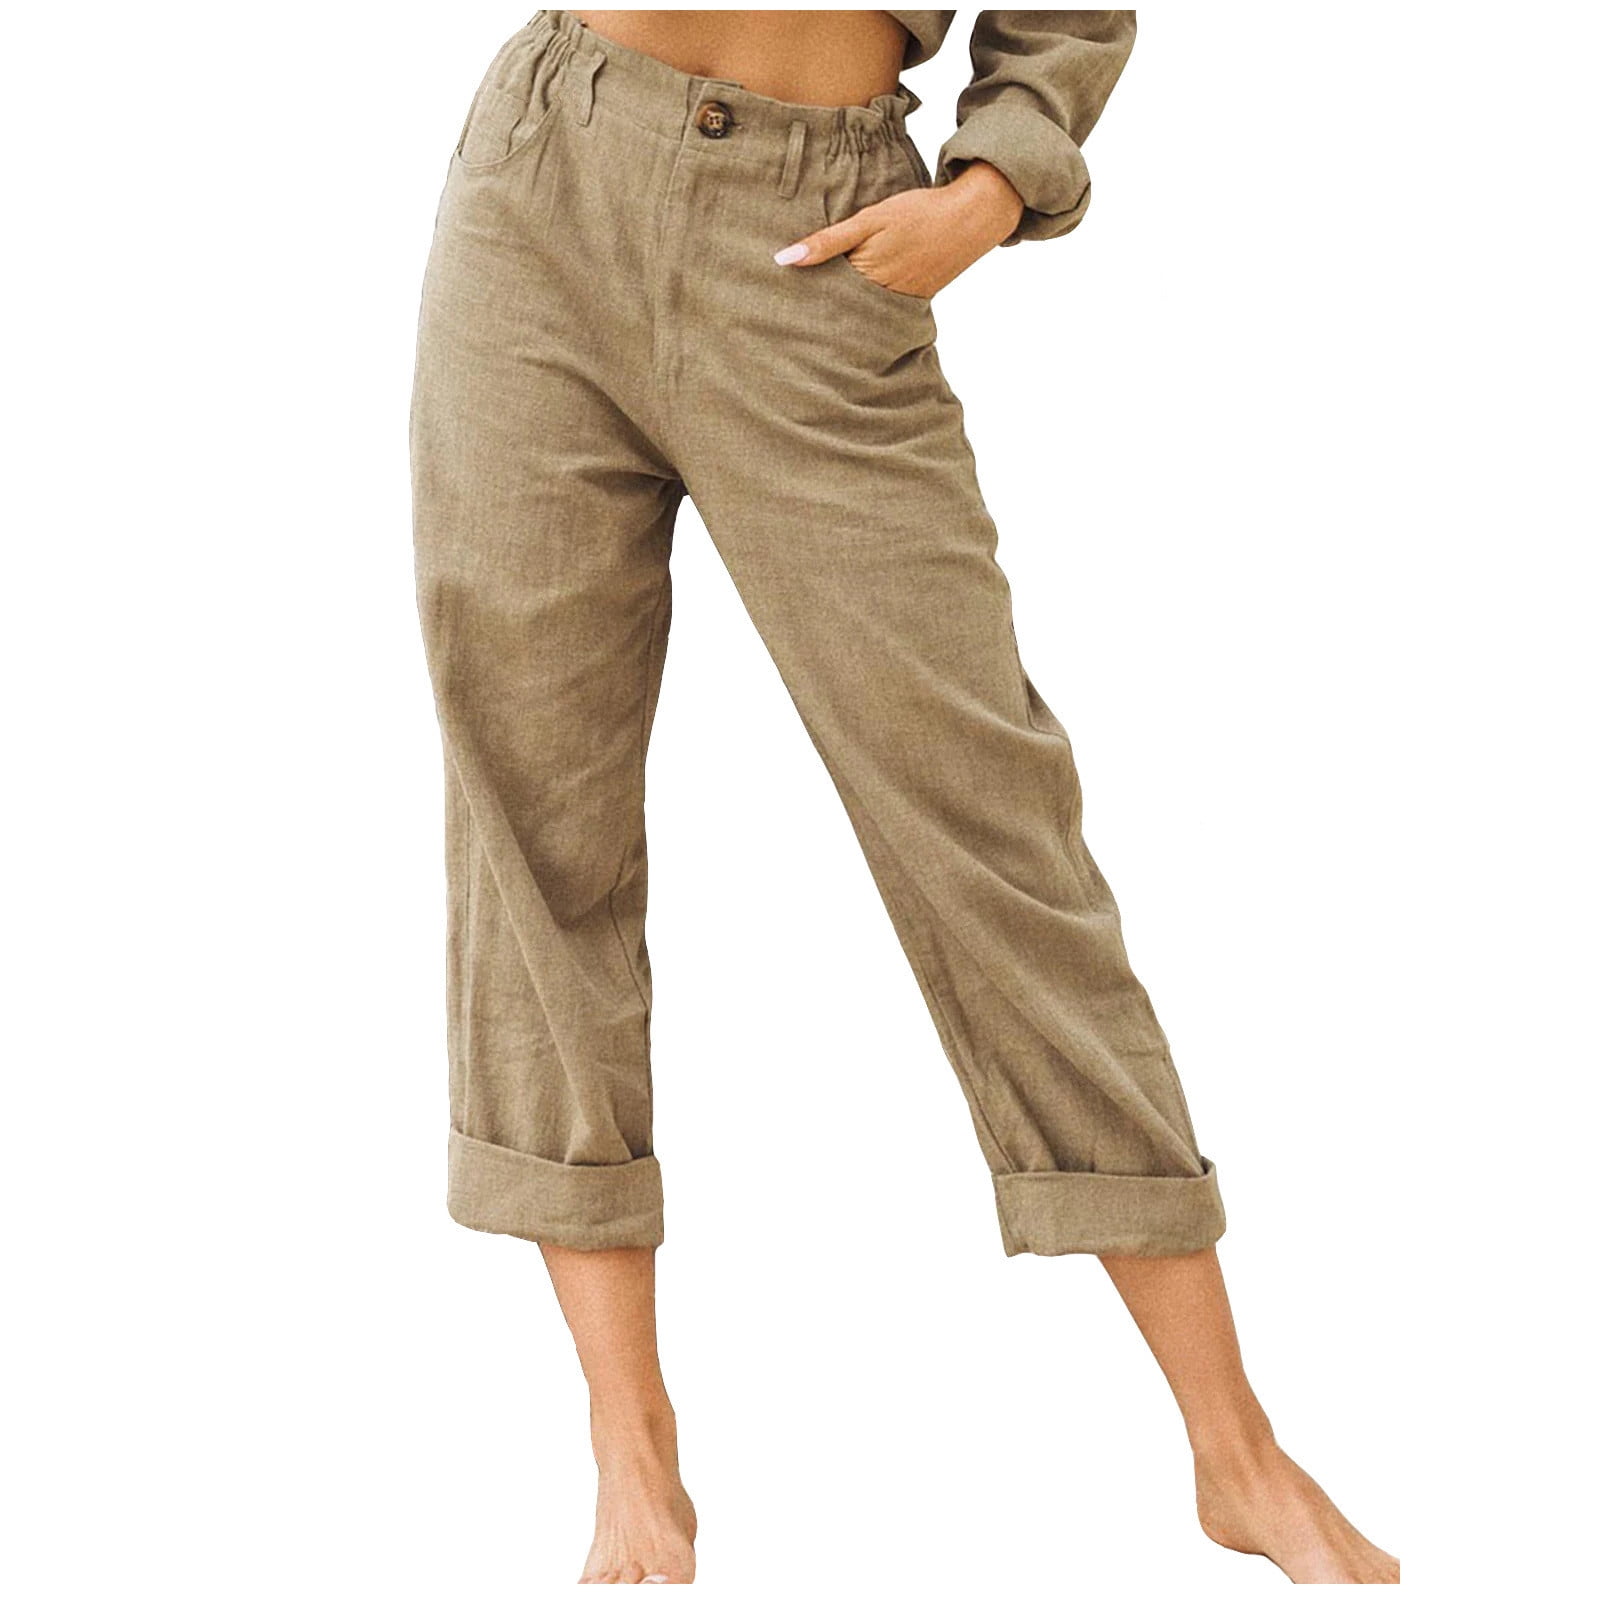 Clearance Summer Capri Pants for Women, Women's Cotton Linen Button ...